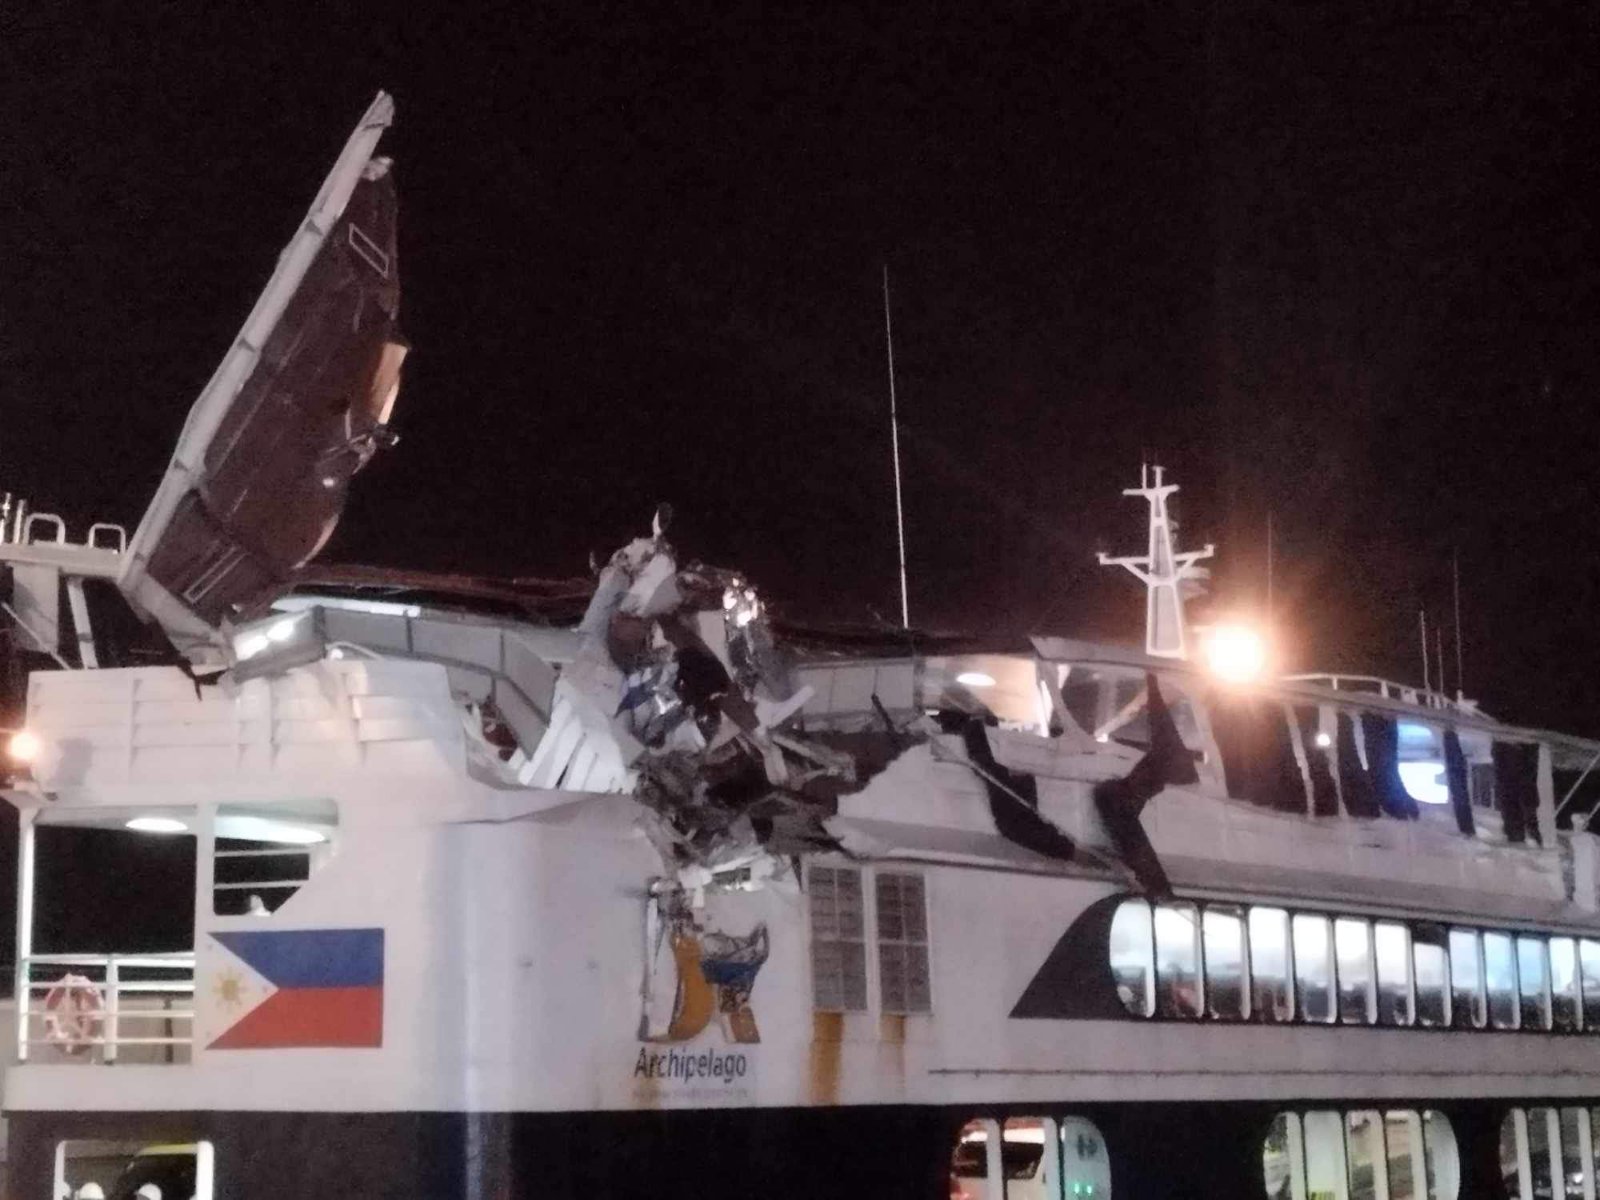 Collision of Pax Vessel, Barge in Isla Verde, 1 hurt